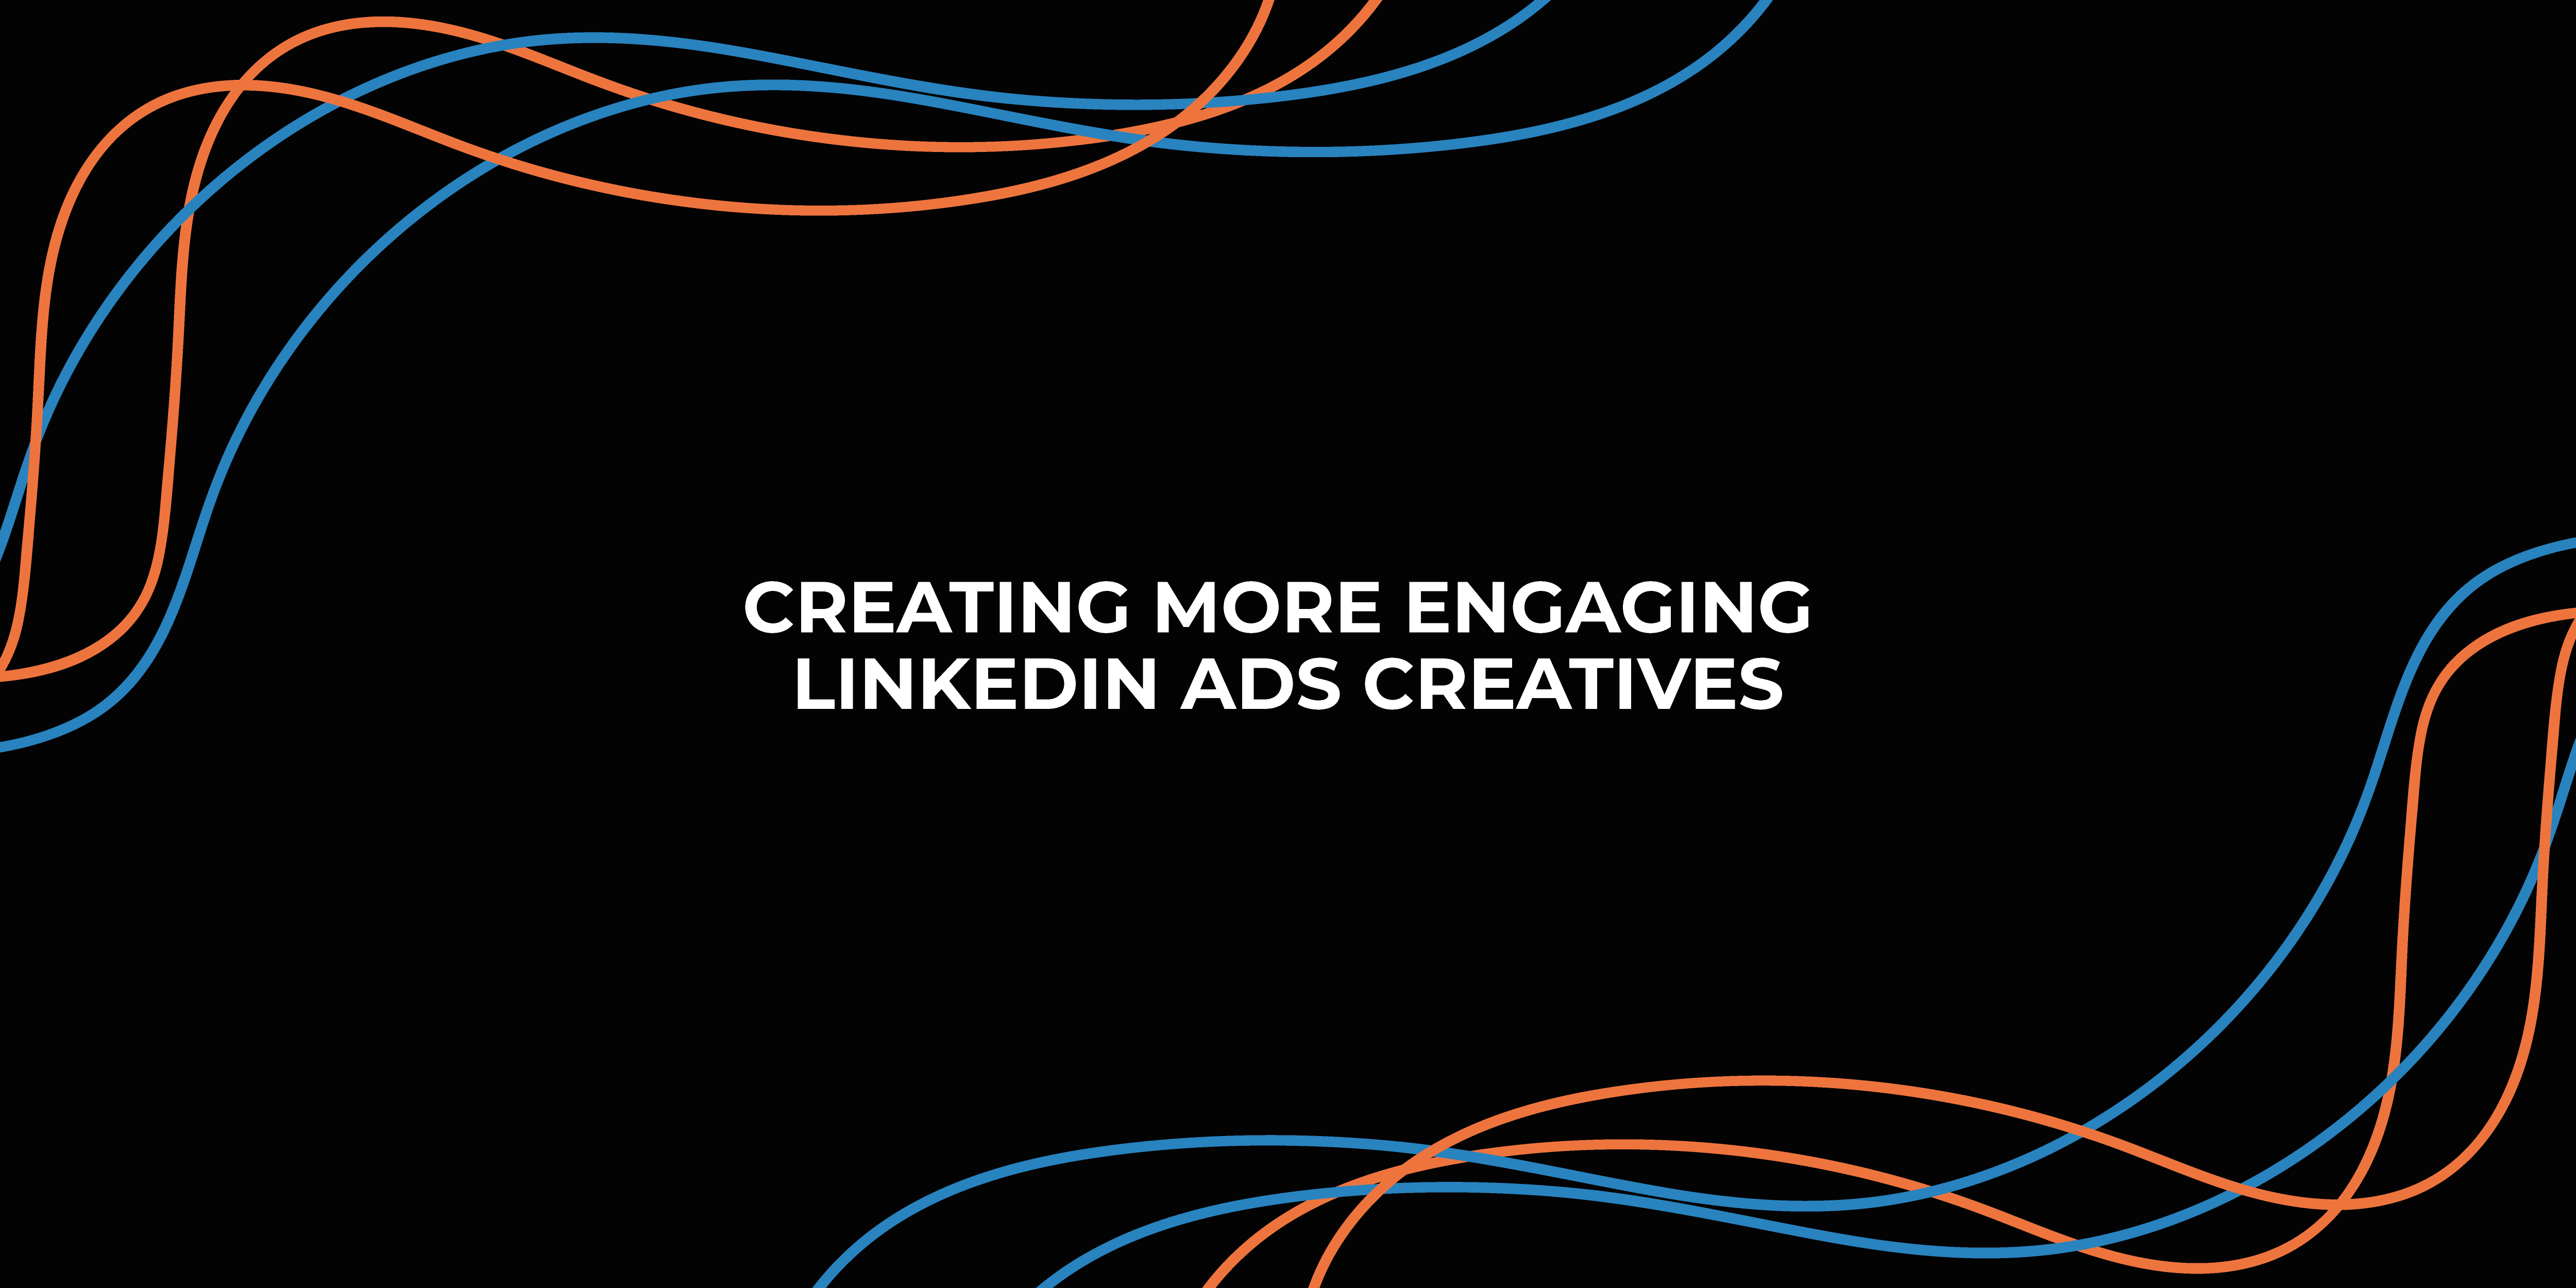 Creating More Engaging LinkedIn Ads Creatives